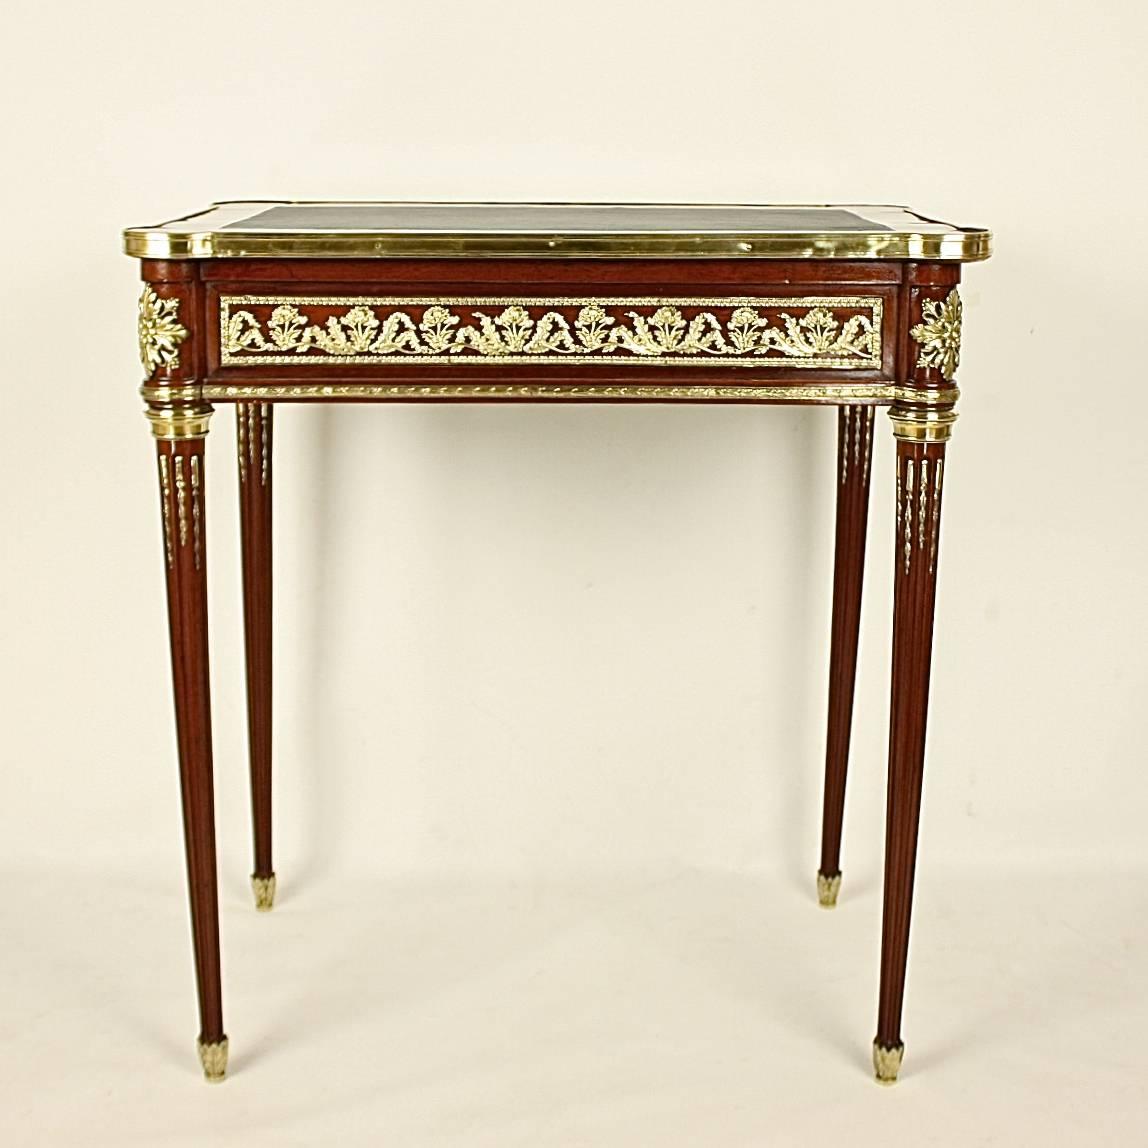 French Rare Small Louis XVI Style Mahogany Bureau Plat or Side Table